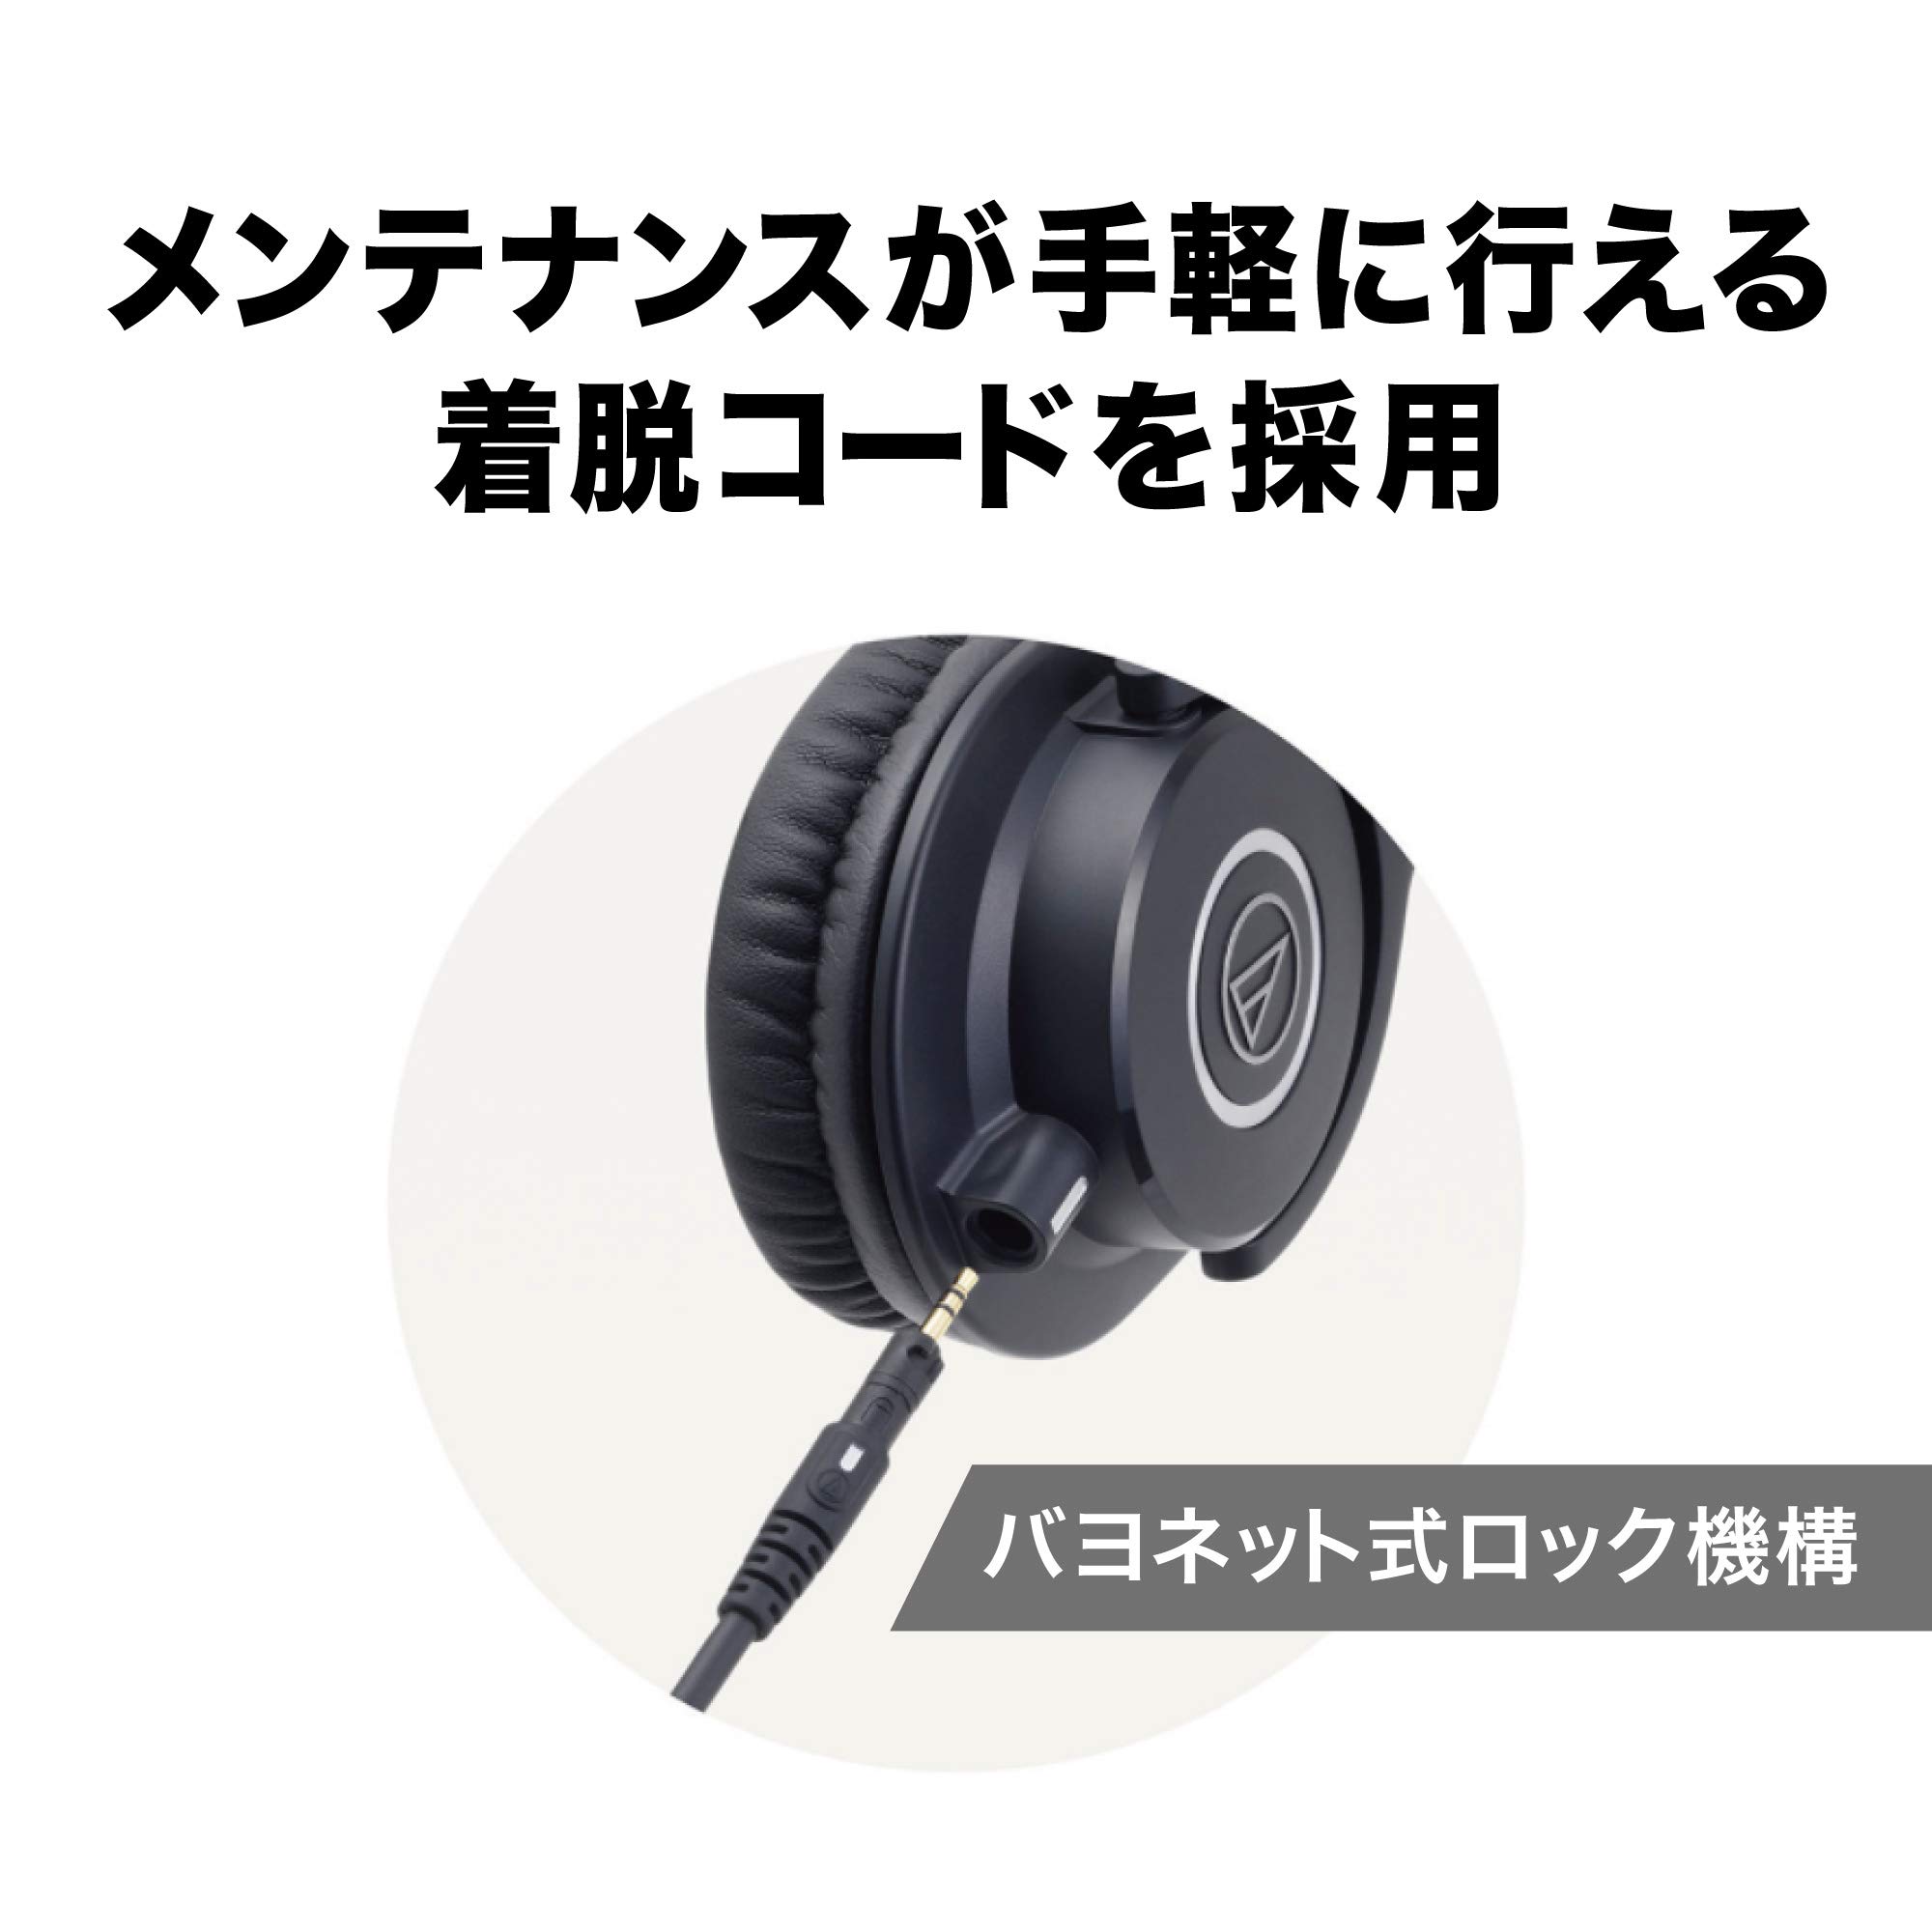 Audio-Technica ATH-M40x Professional Studio Monitor Headphone, Black, 90 Degree Swiveling Earcups & Focusrite Scarlett Solo (3rd Gen) USB Audio Interface with Pro Tools | First